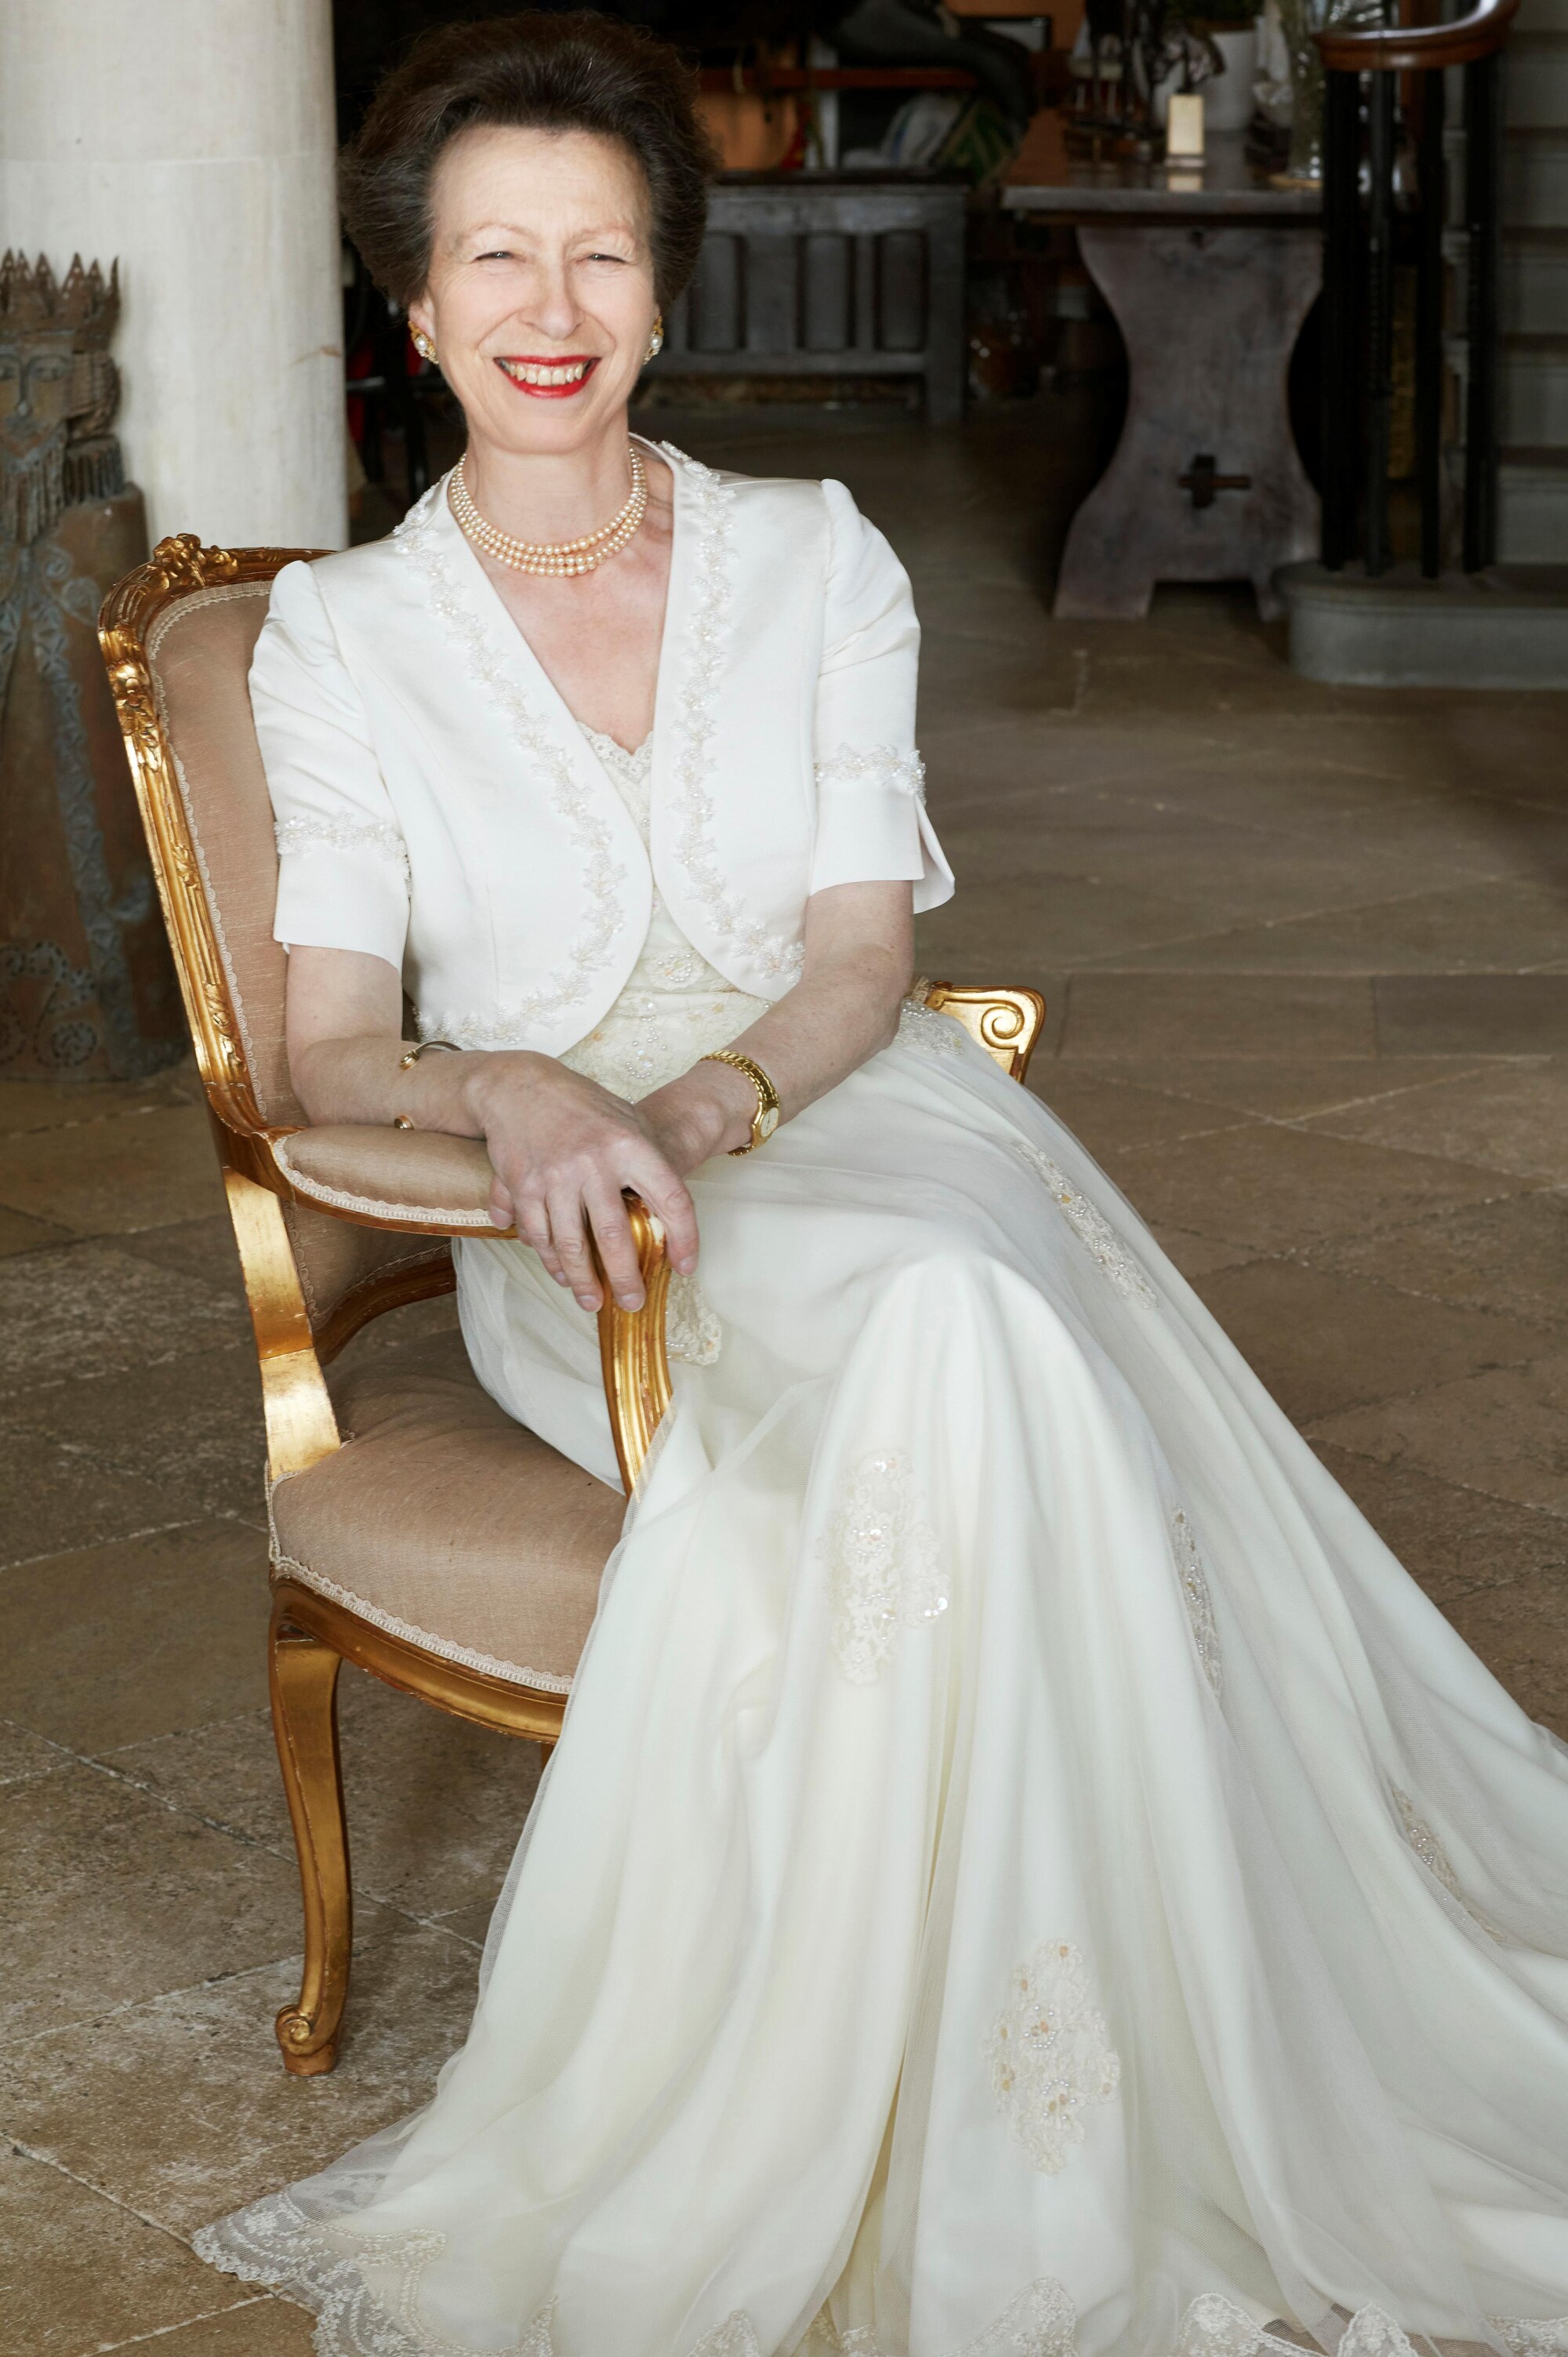 Princess Anne turns 70 with low key celebration